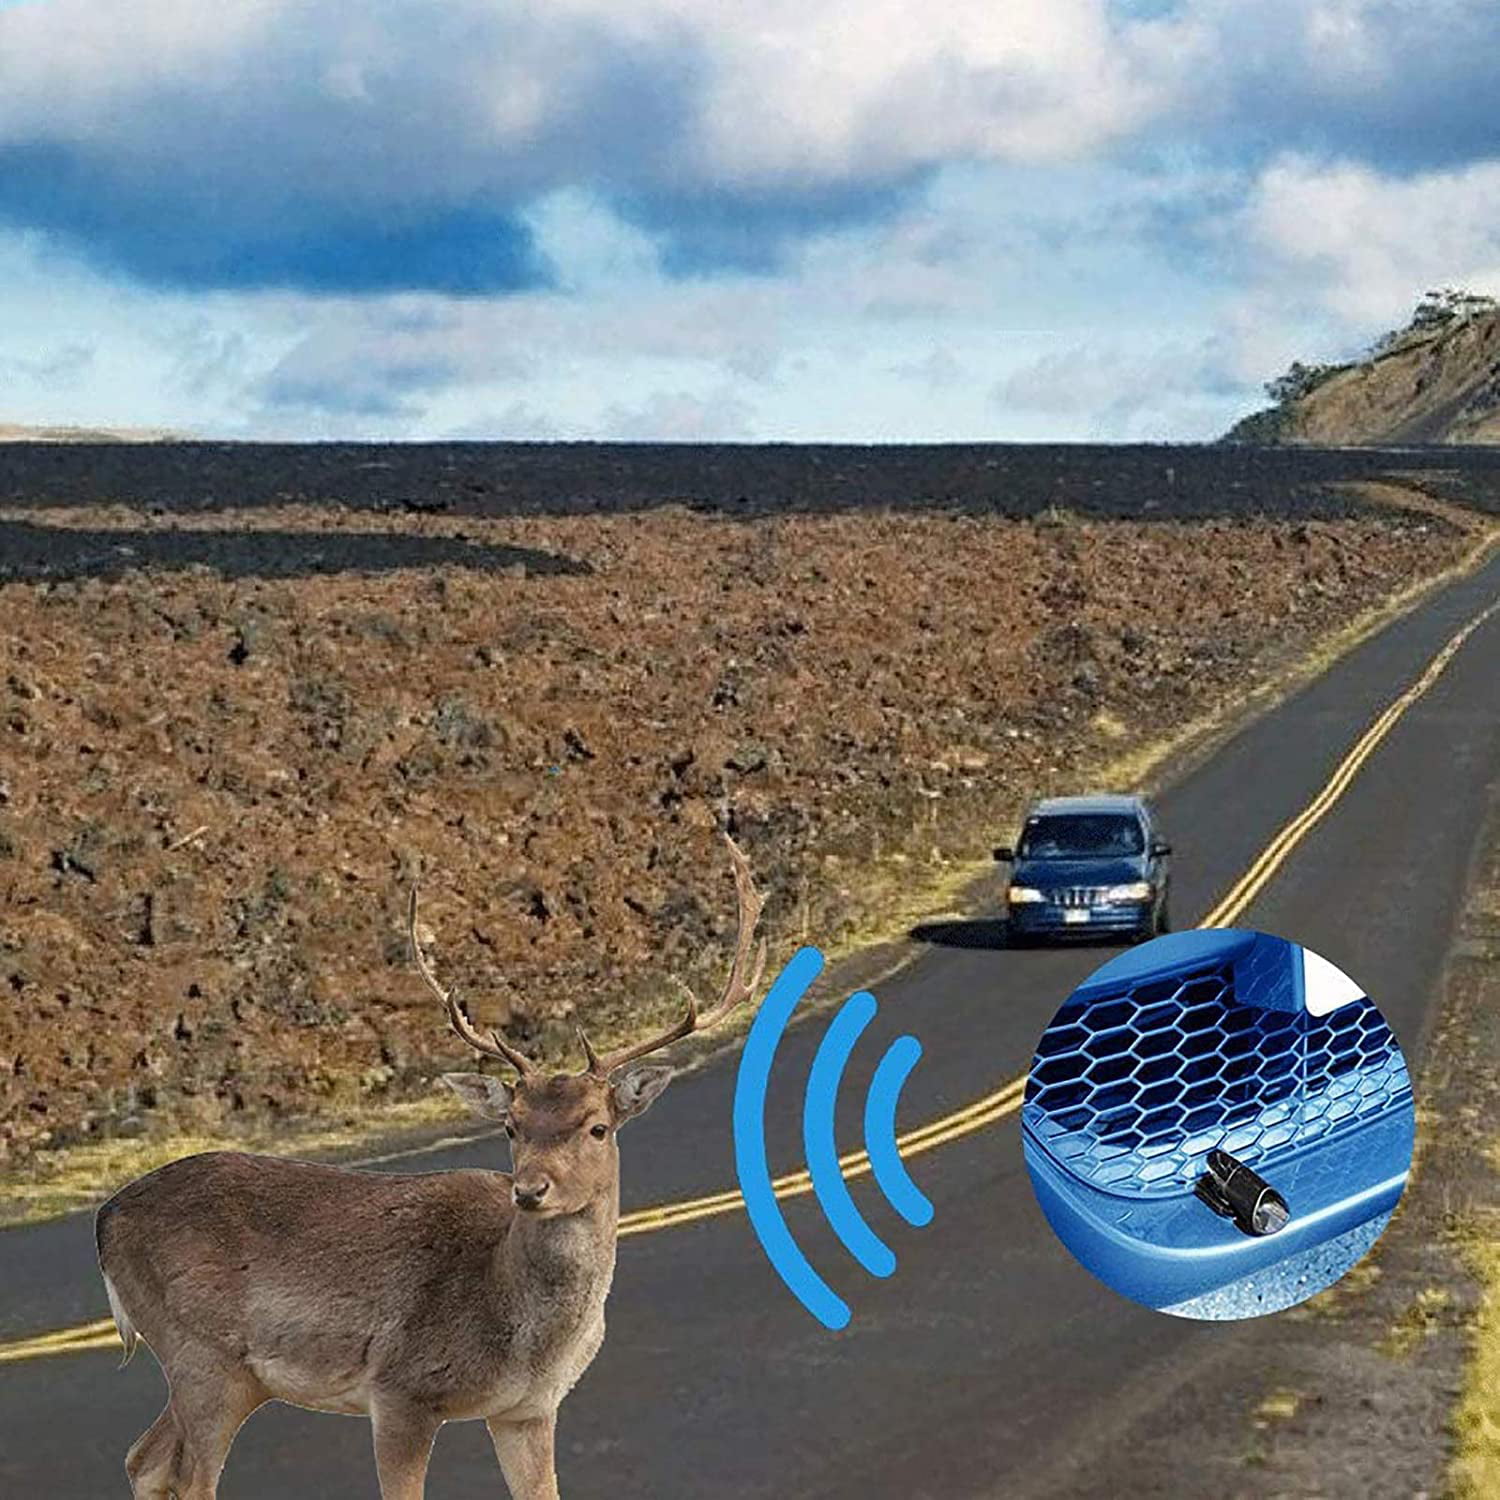 2Pcs Animal Repeller Practical Portable Deerdrive Device for Deer Vehicle Animal 